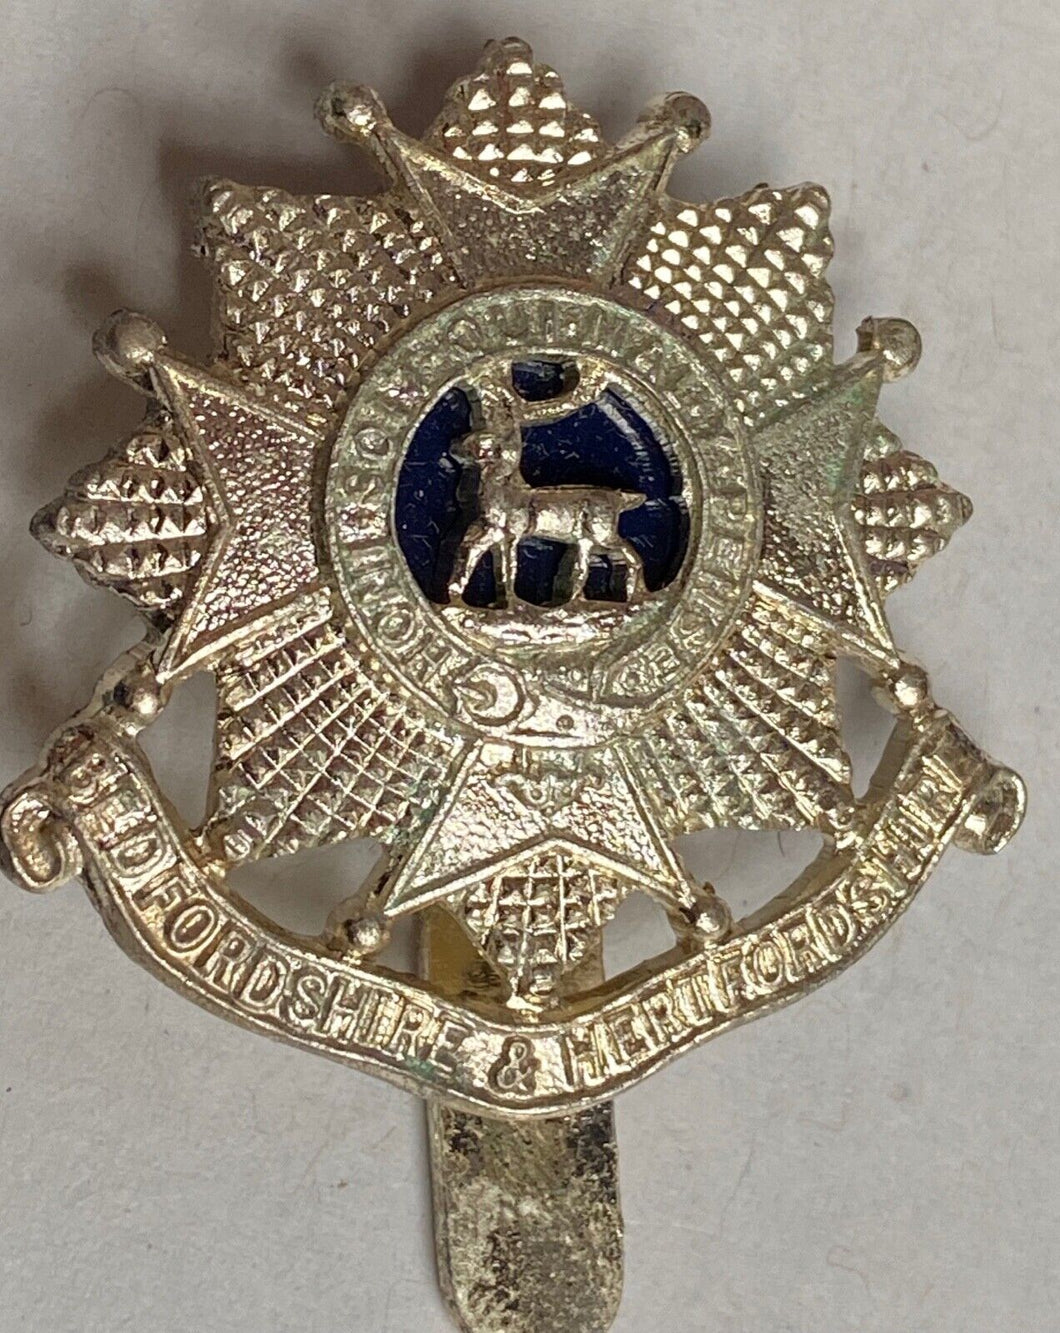 A white metal British Army Bedfordshire & Hertfordshire Regiment cap badge.